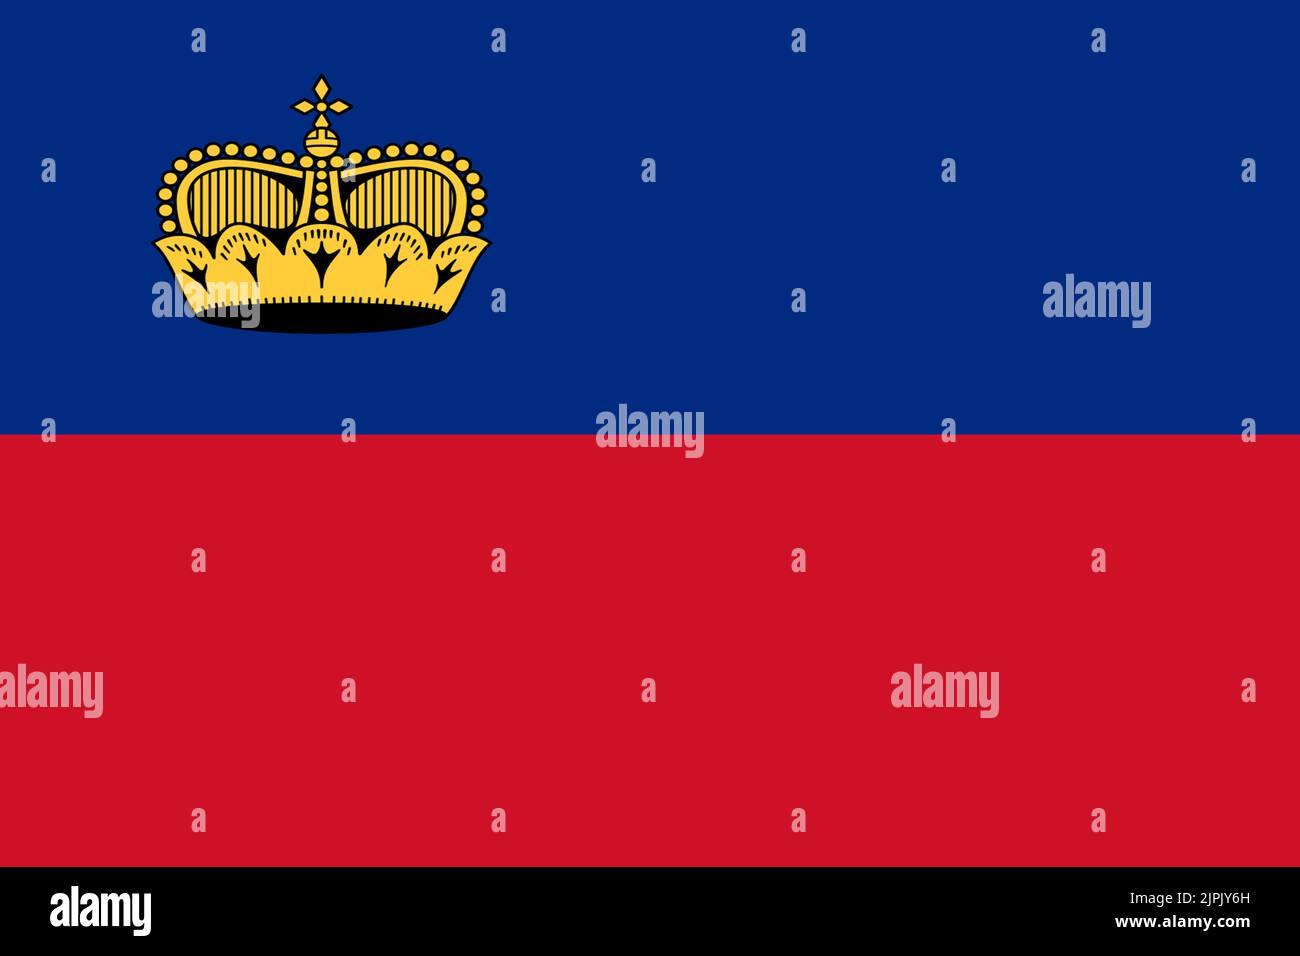 Liechtenstein flag background illustration large file blue red crown Stock Photo